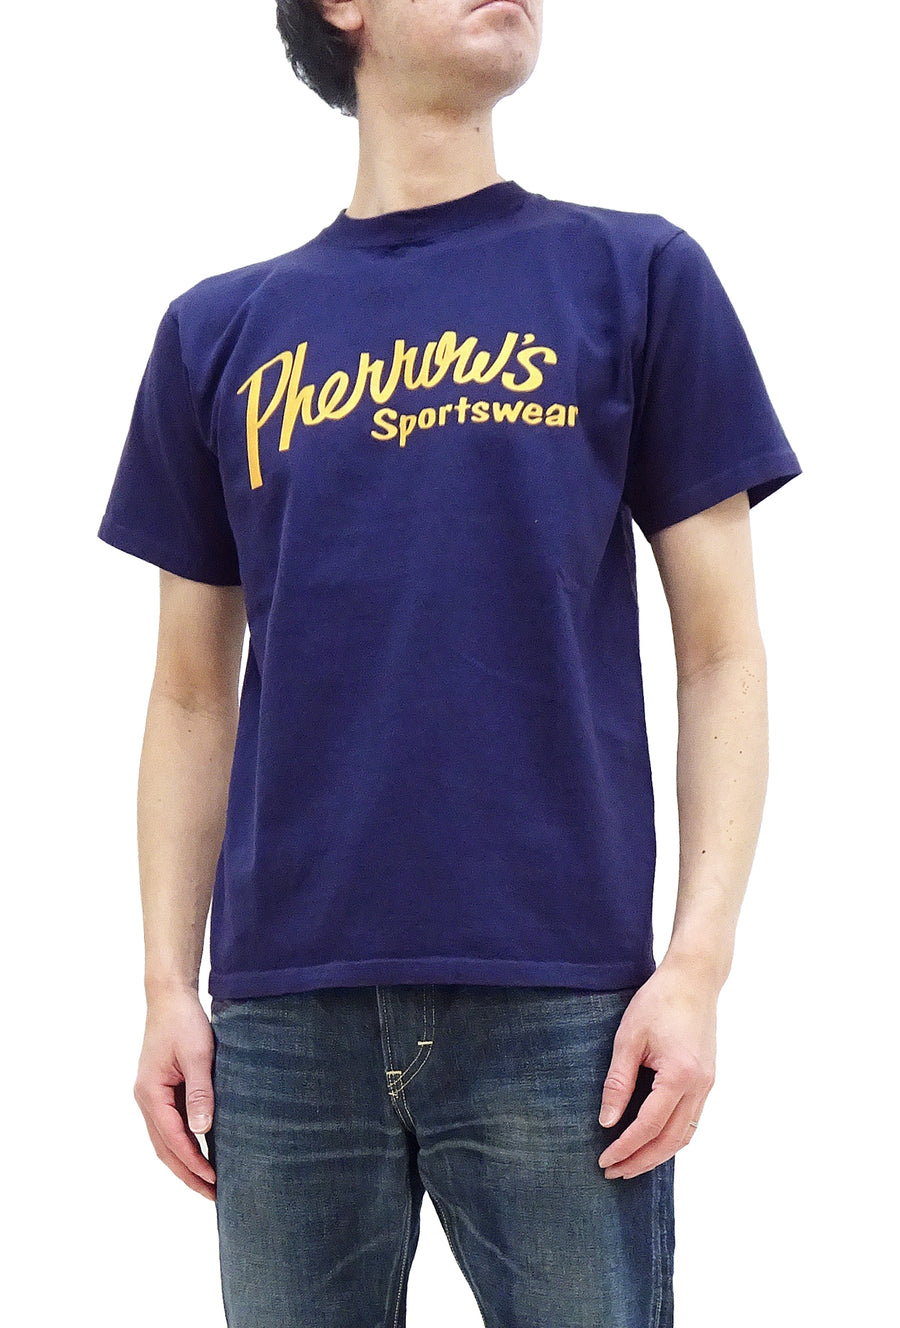 Pherrows T-Shirt Men's Short Sleeve Graphic Print Brand Logo Tee